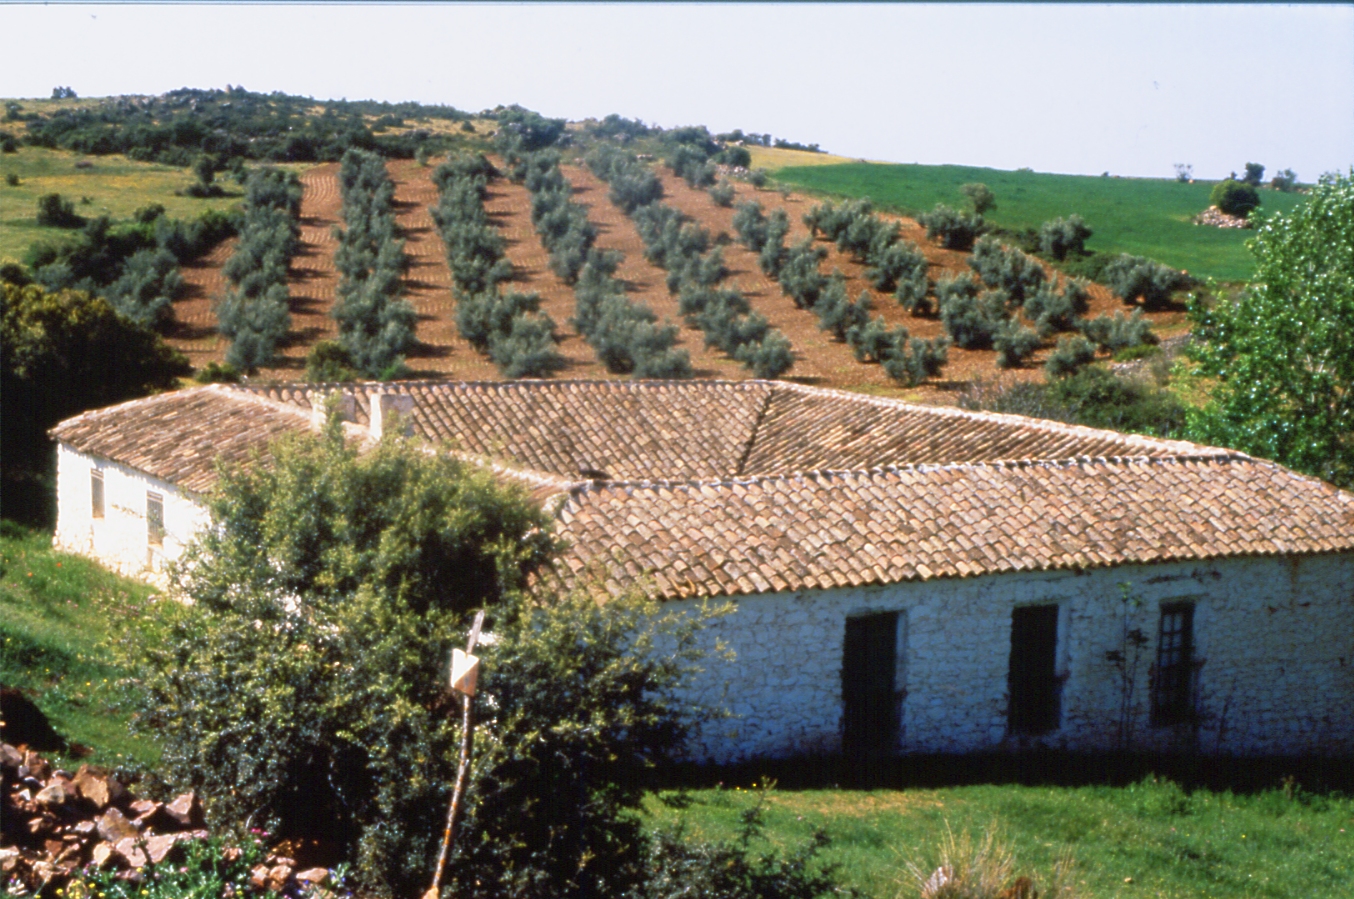 A typical farm in Sierra Morena. Photo: Wikipedia